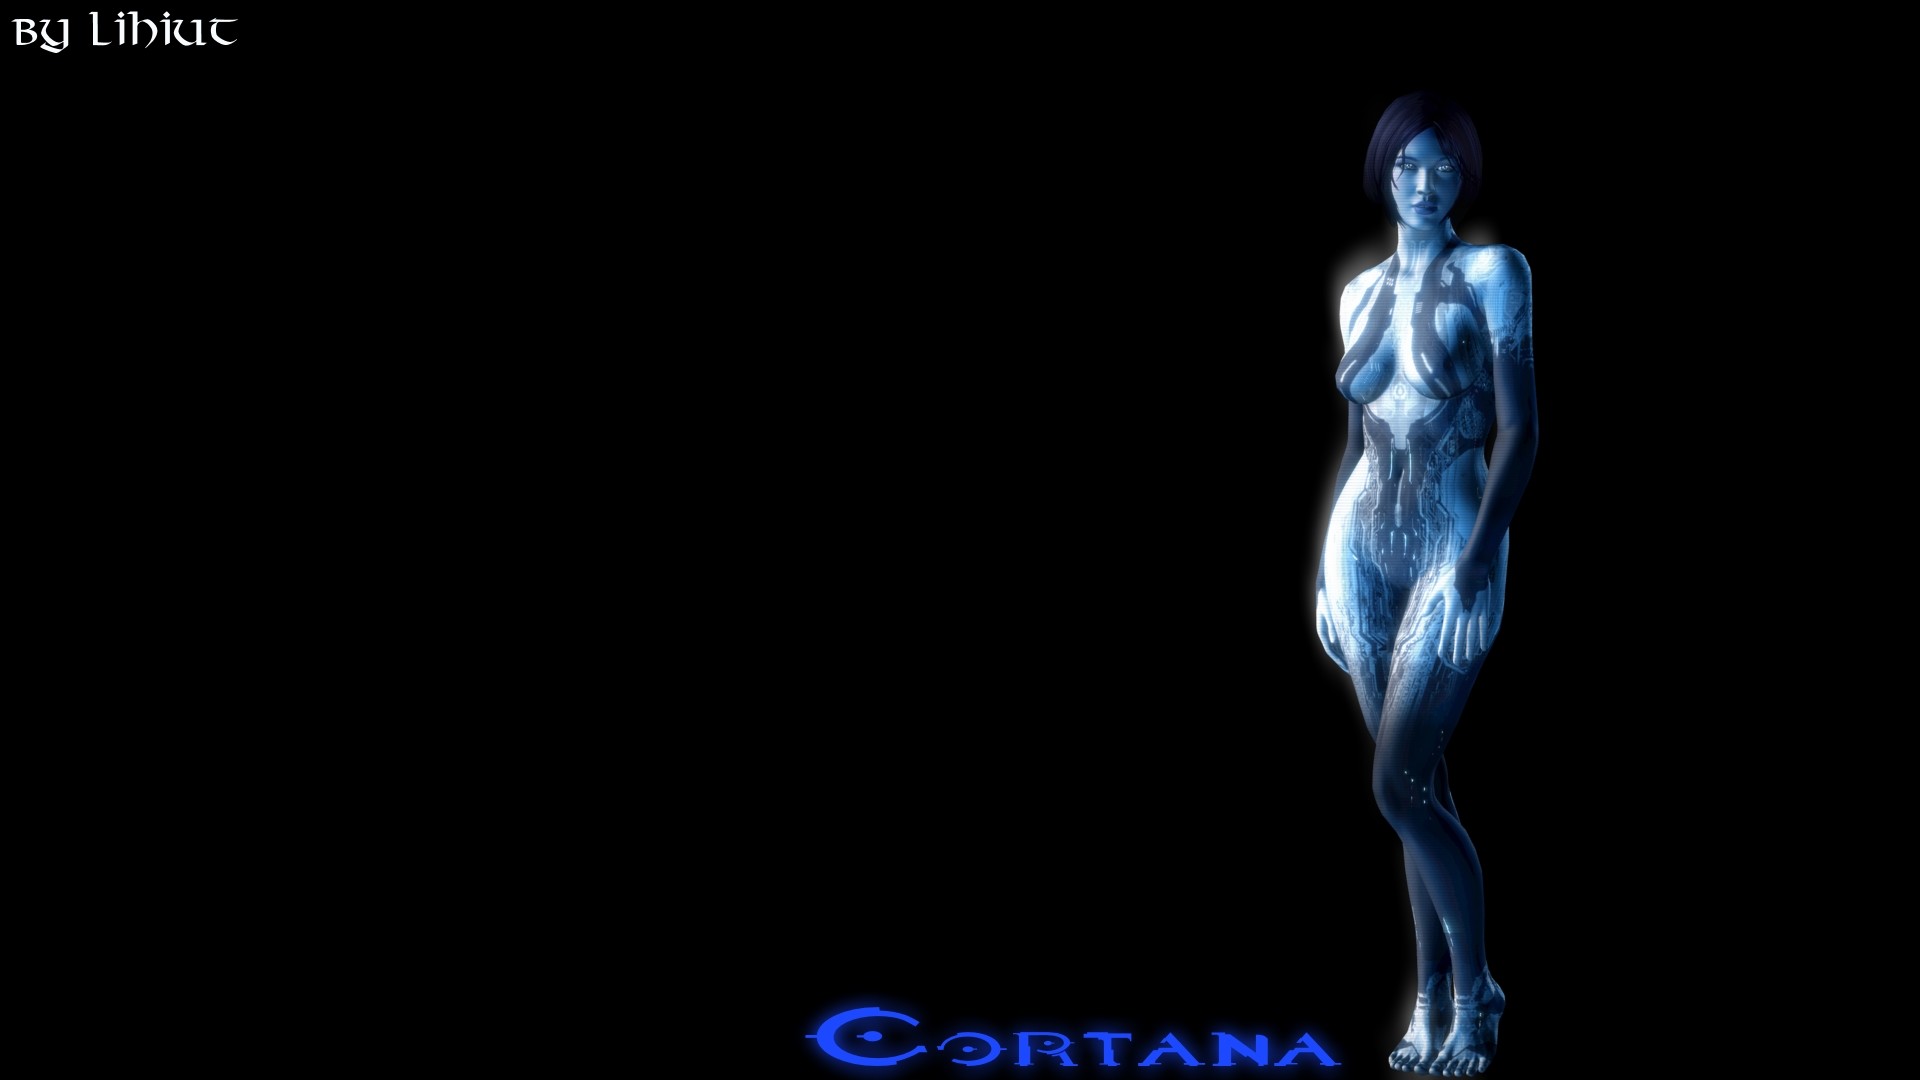 1920x1080 Cortana Wallpaper Black By Lihiut On DeviantArt